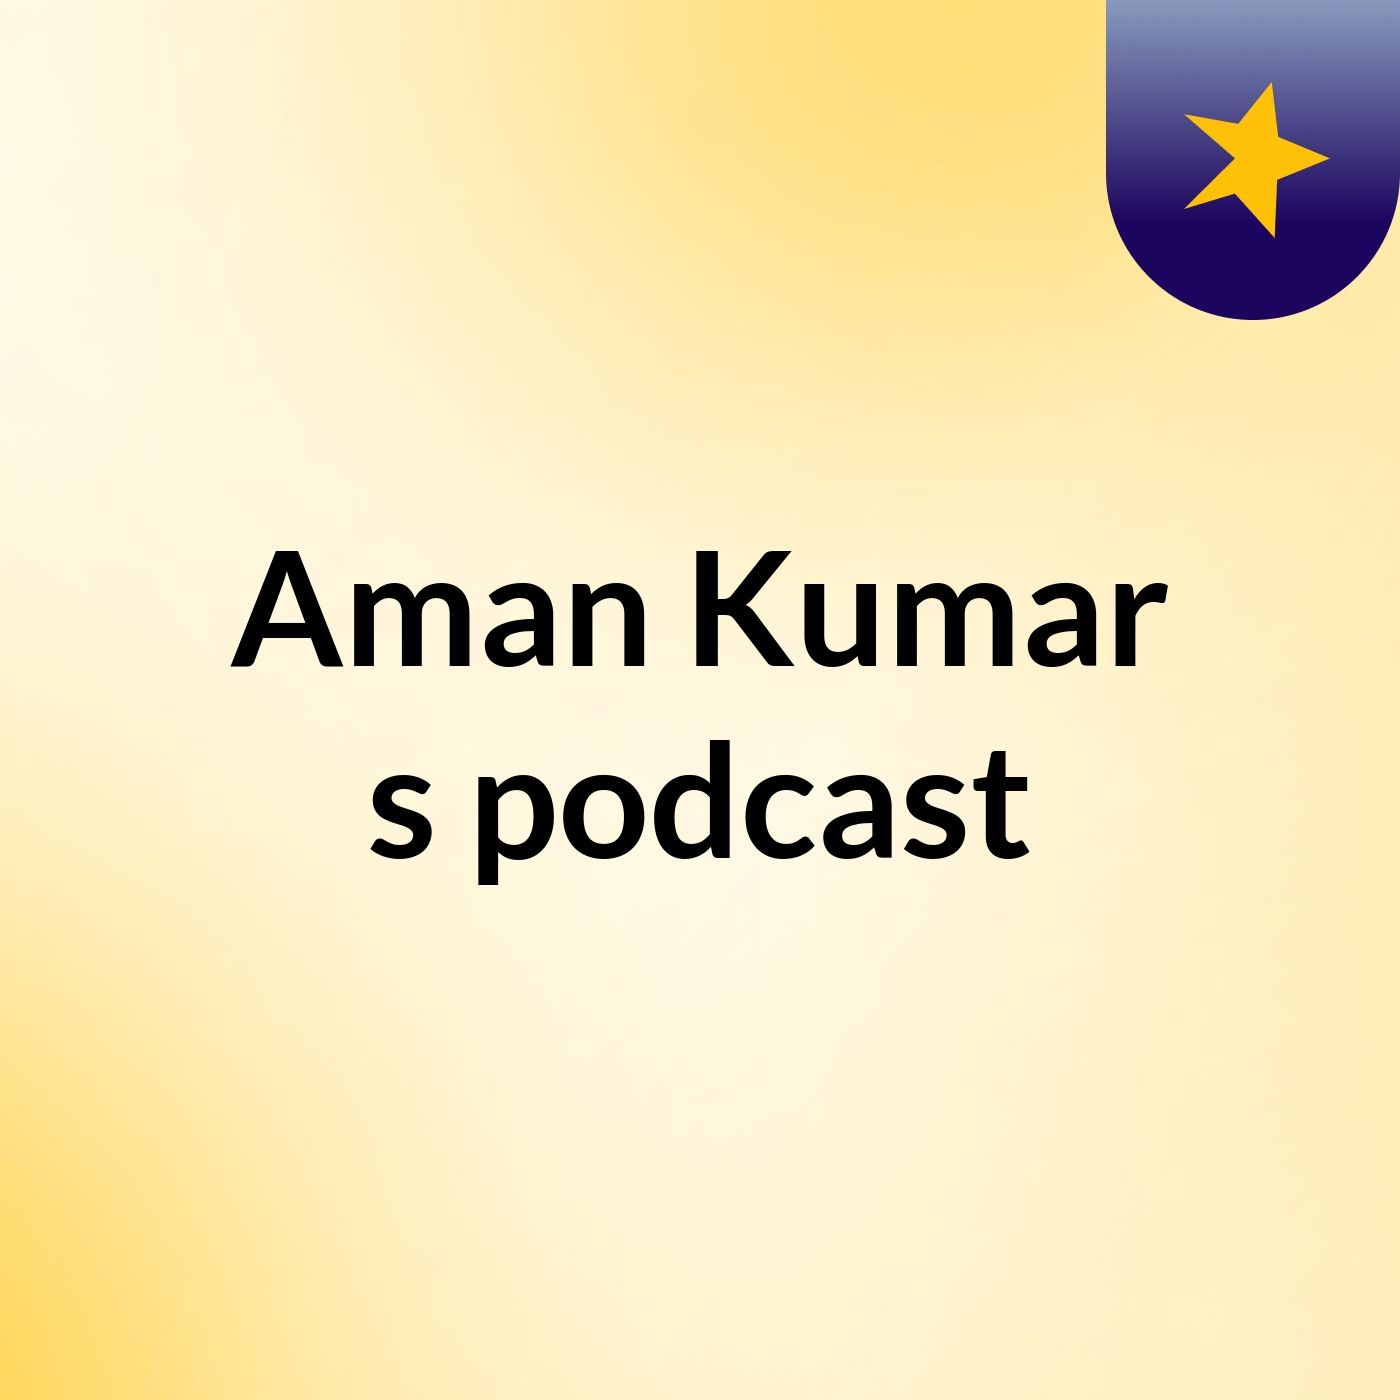 Episode 4 - Aman Kumar's podcast